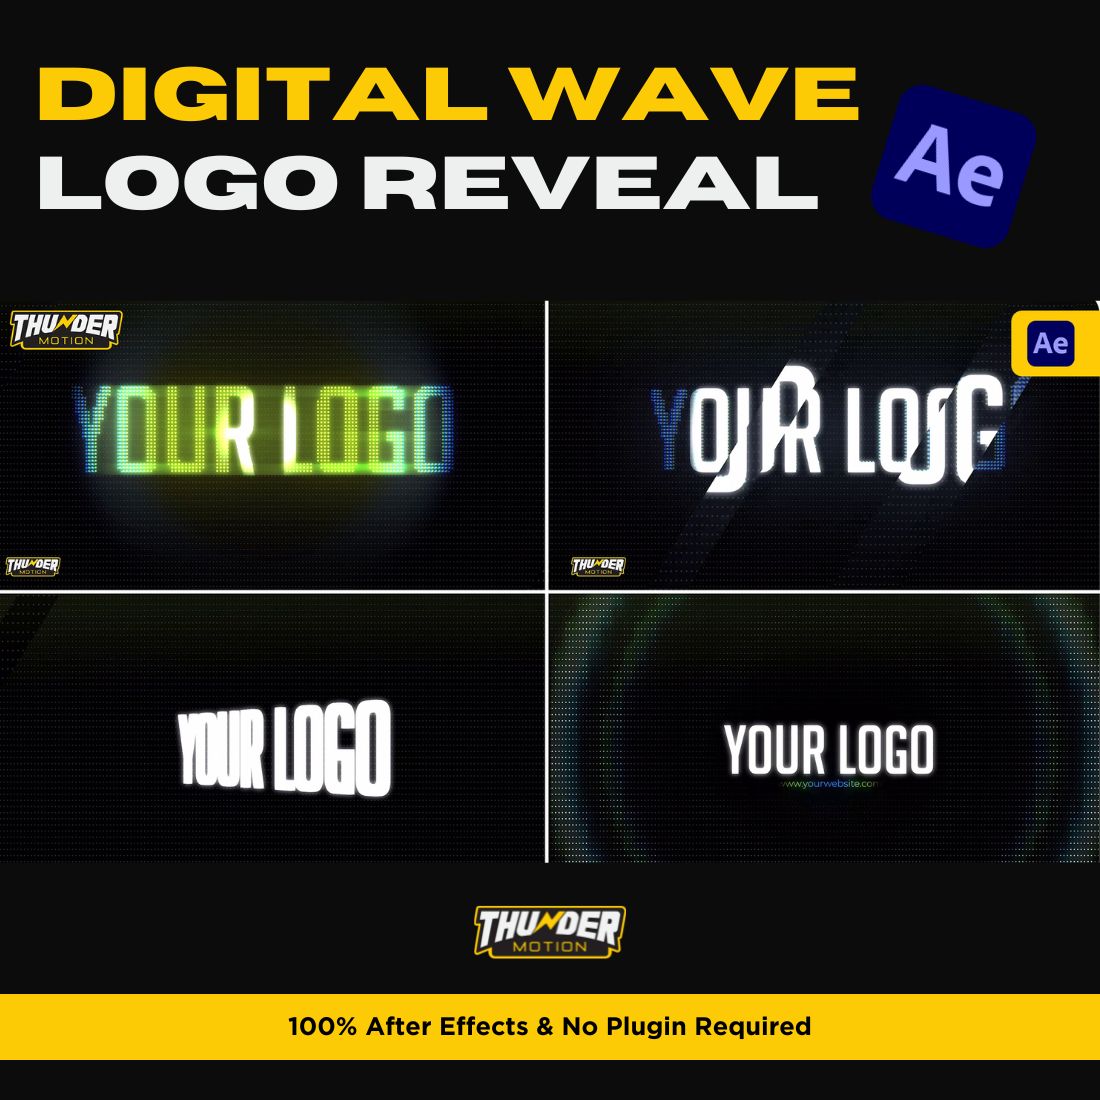 Digital Wave Logo Reveal cover image.